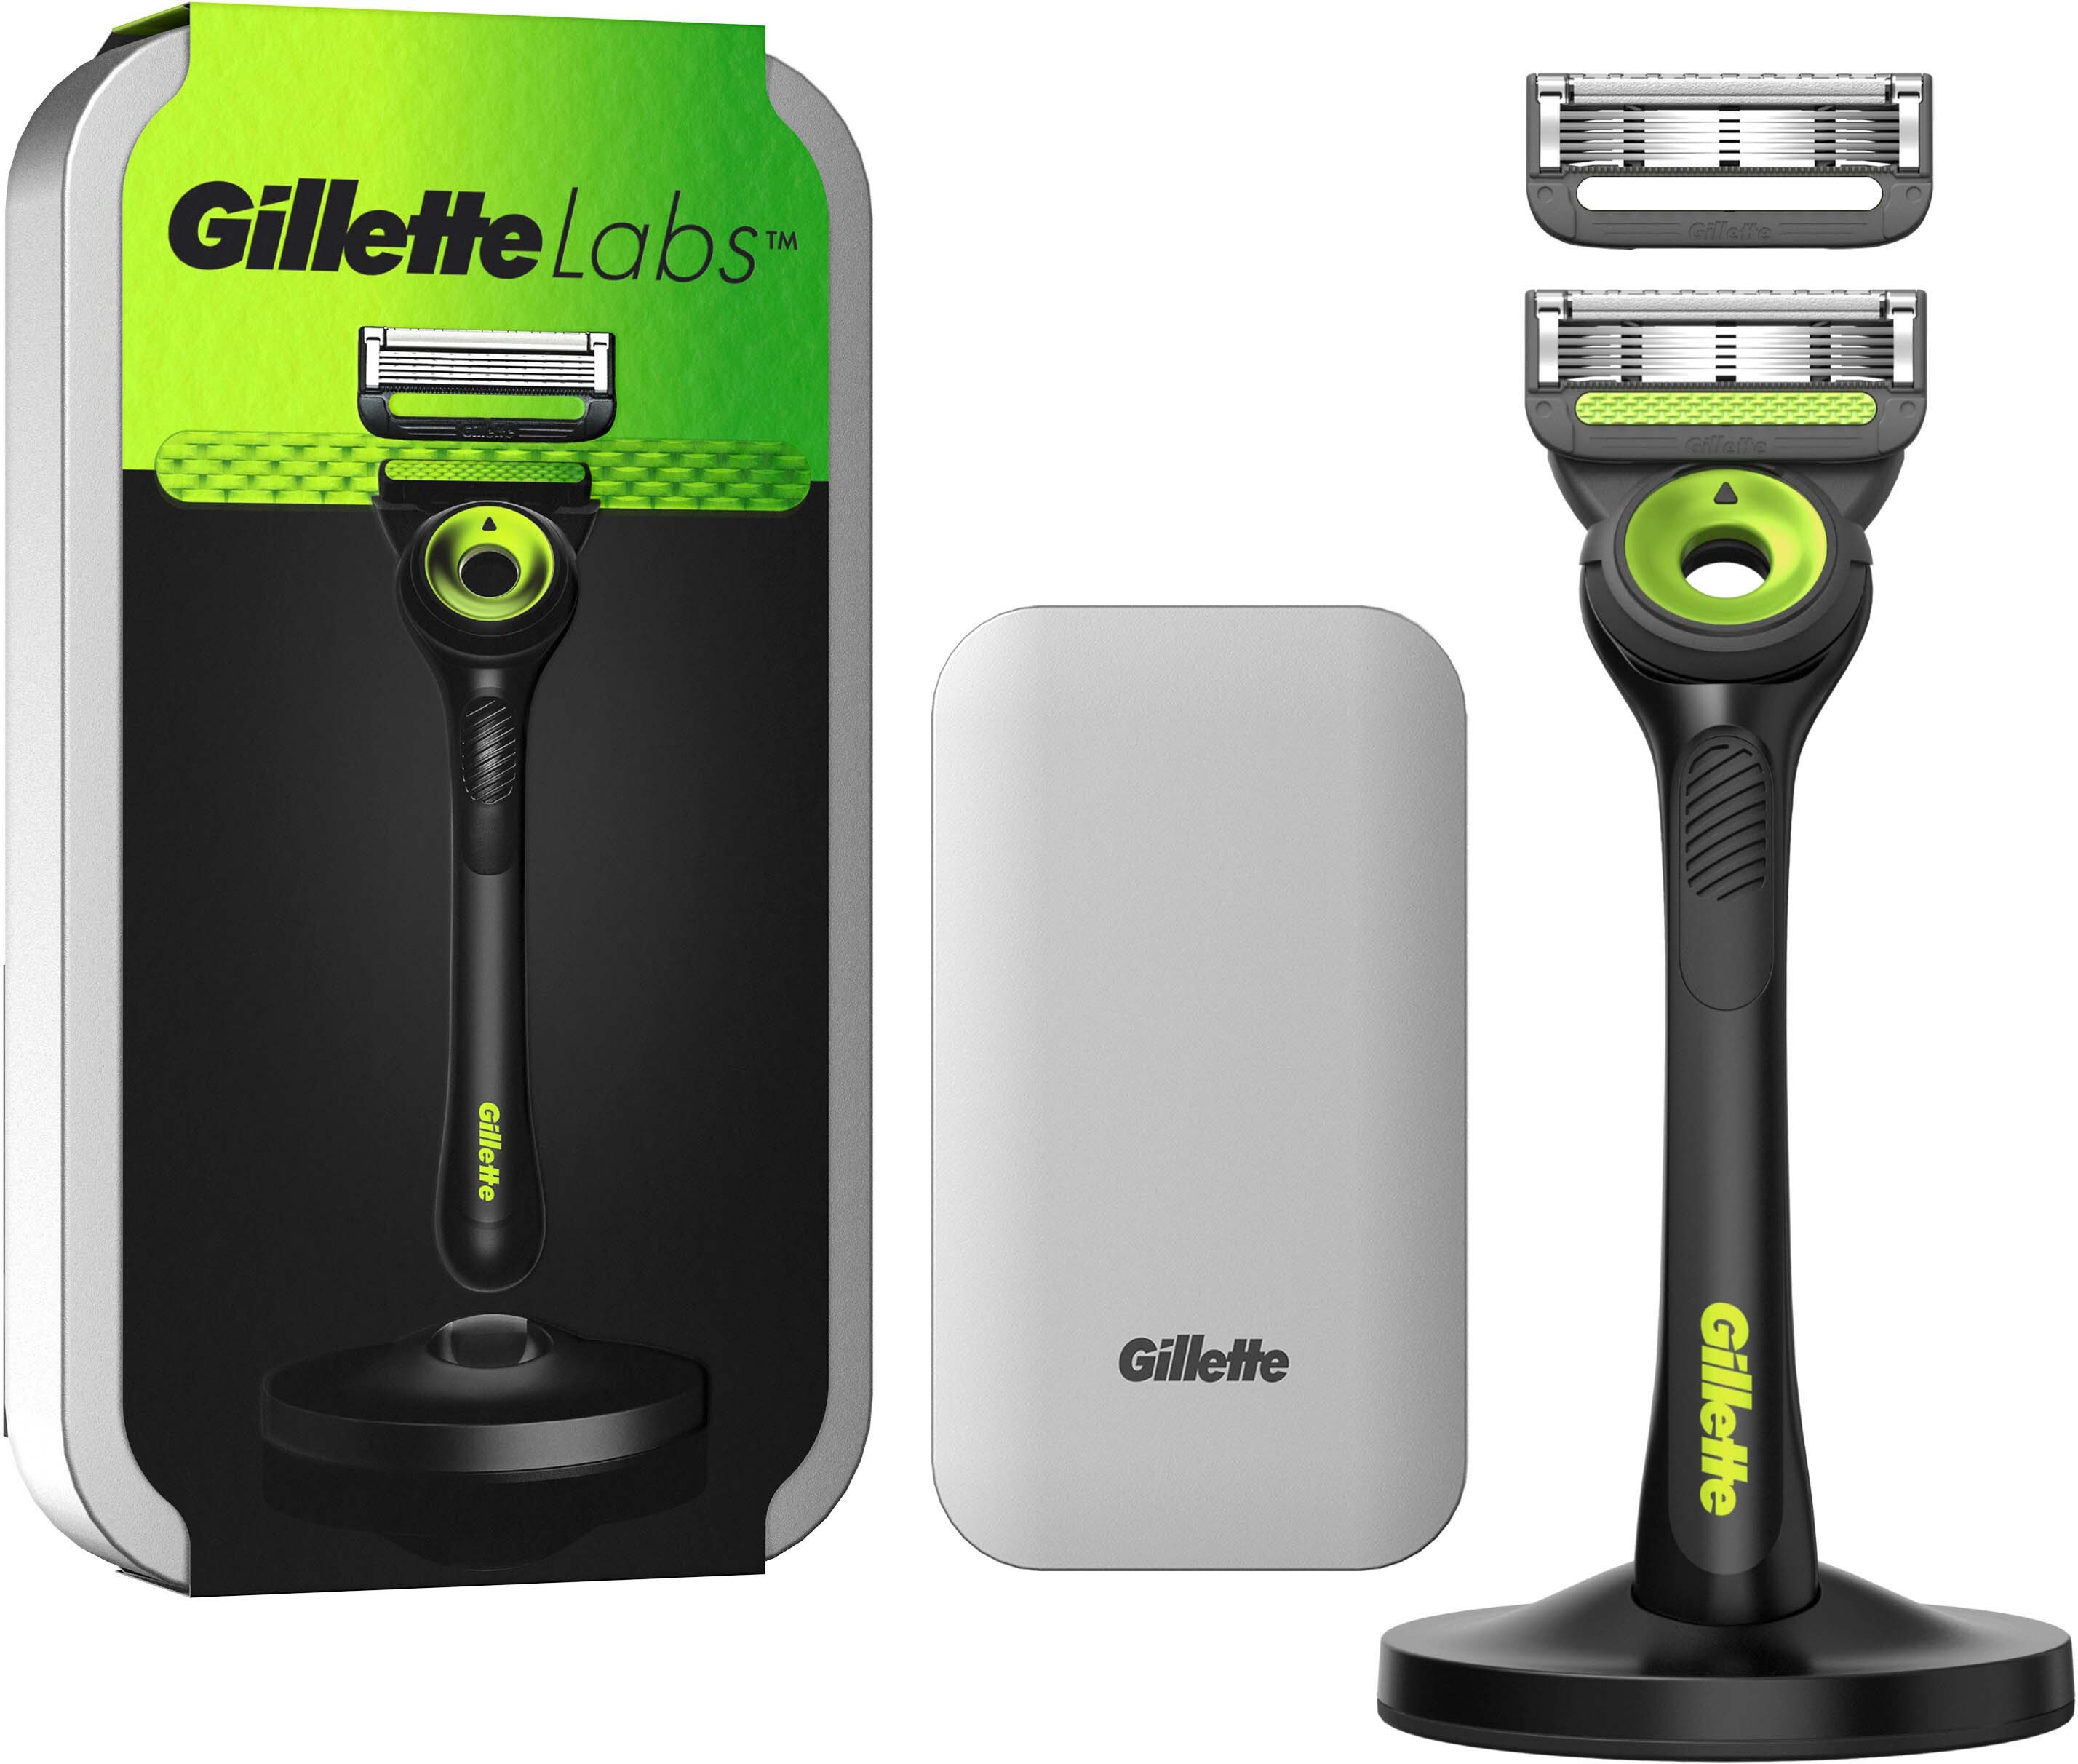 Gillette Labs With Exfoliating Bar Razor Travel Case 2 Blades